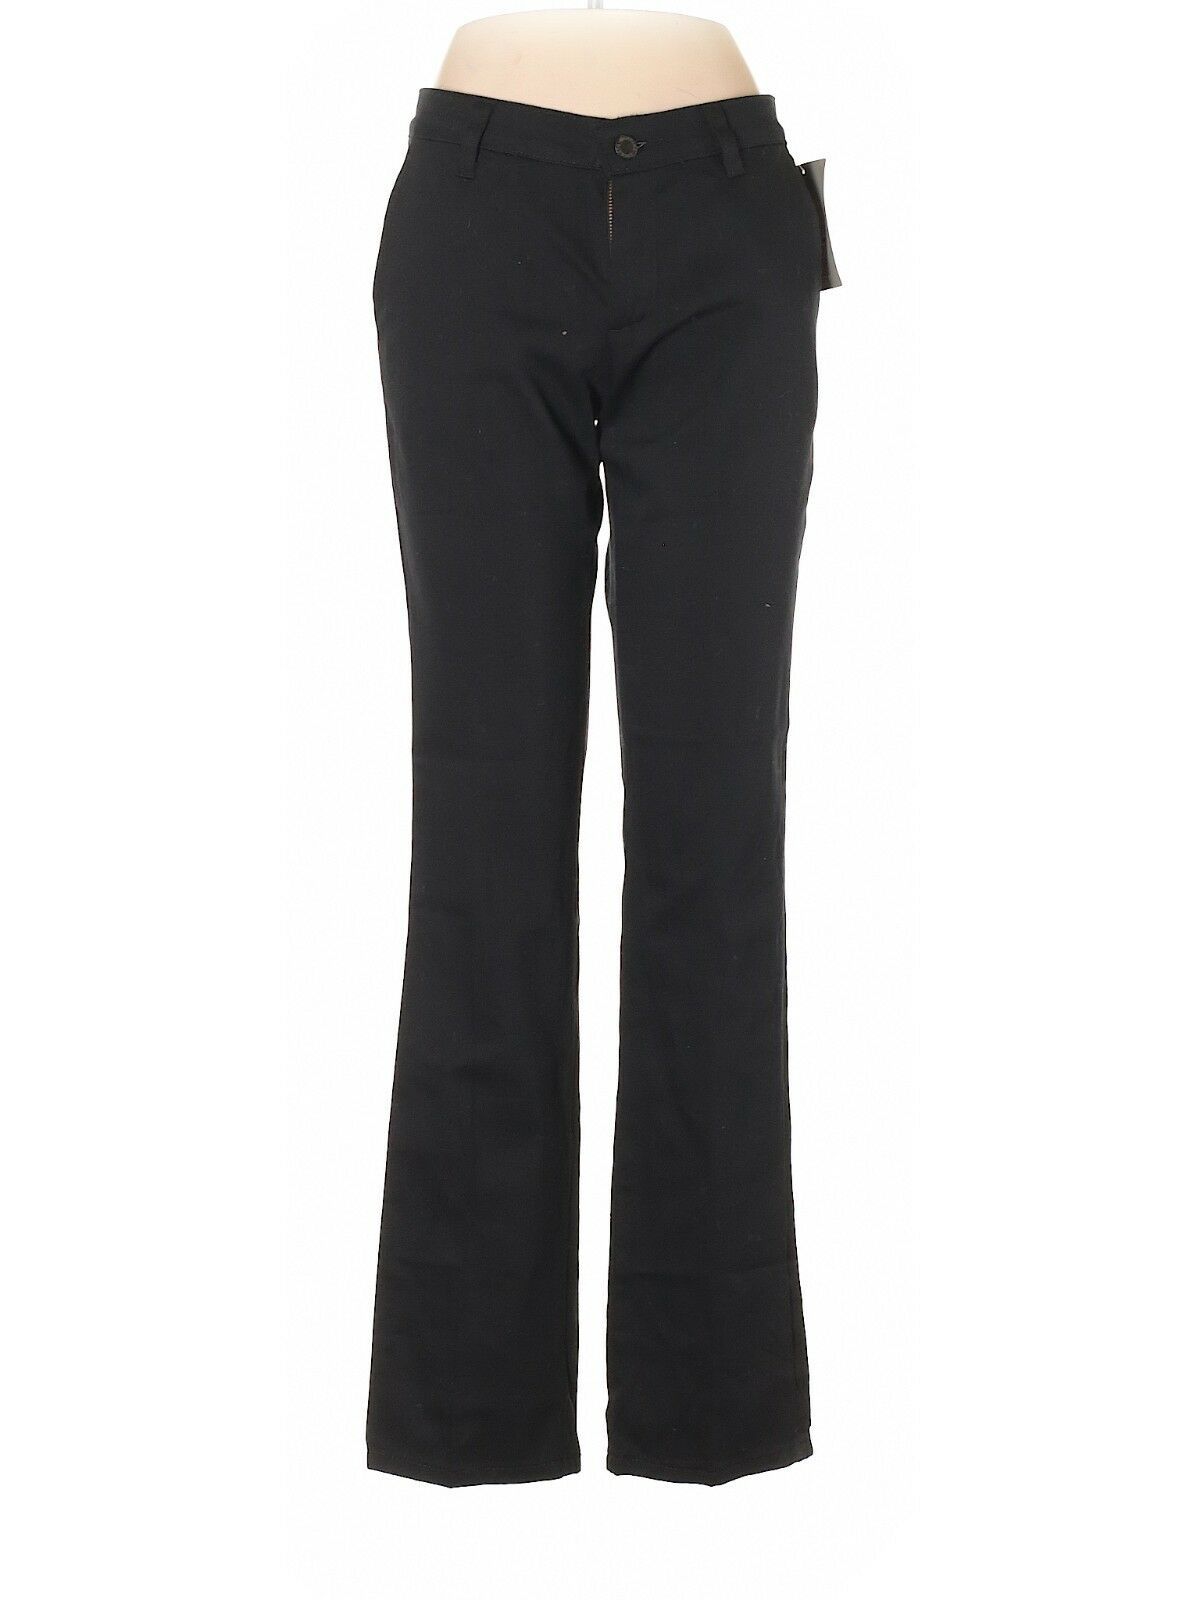 Genuine DICKIES Women's Pants Size 4R Black Slim Fit Straight Leg Stretch Twill  - $23.55